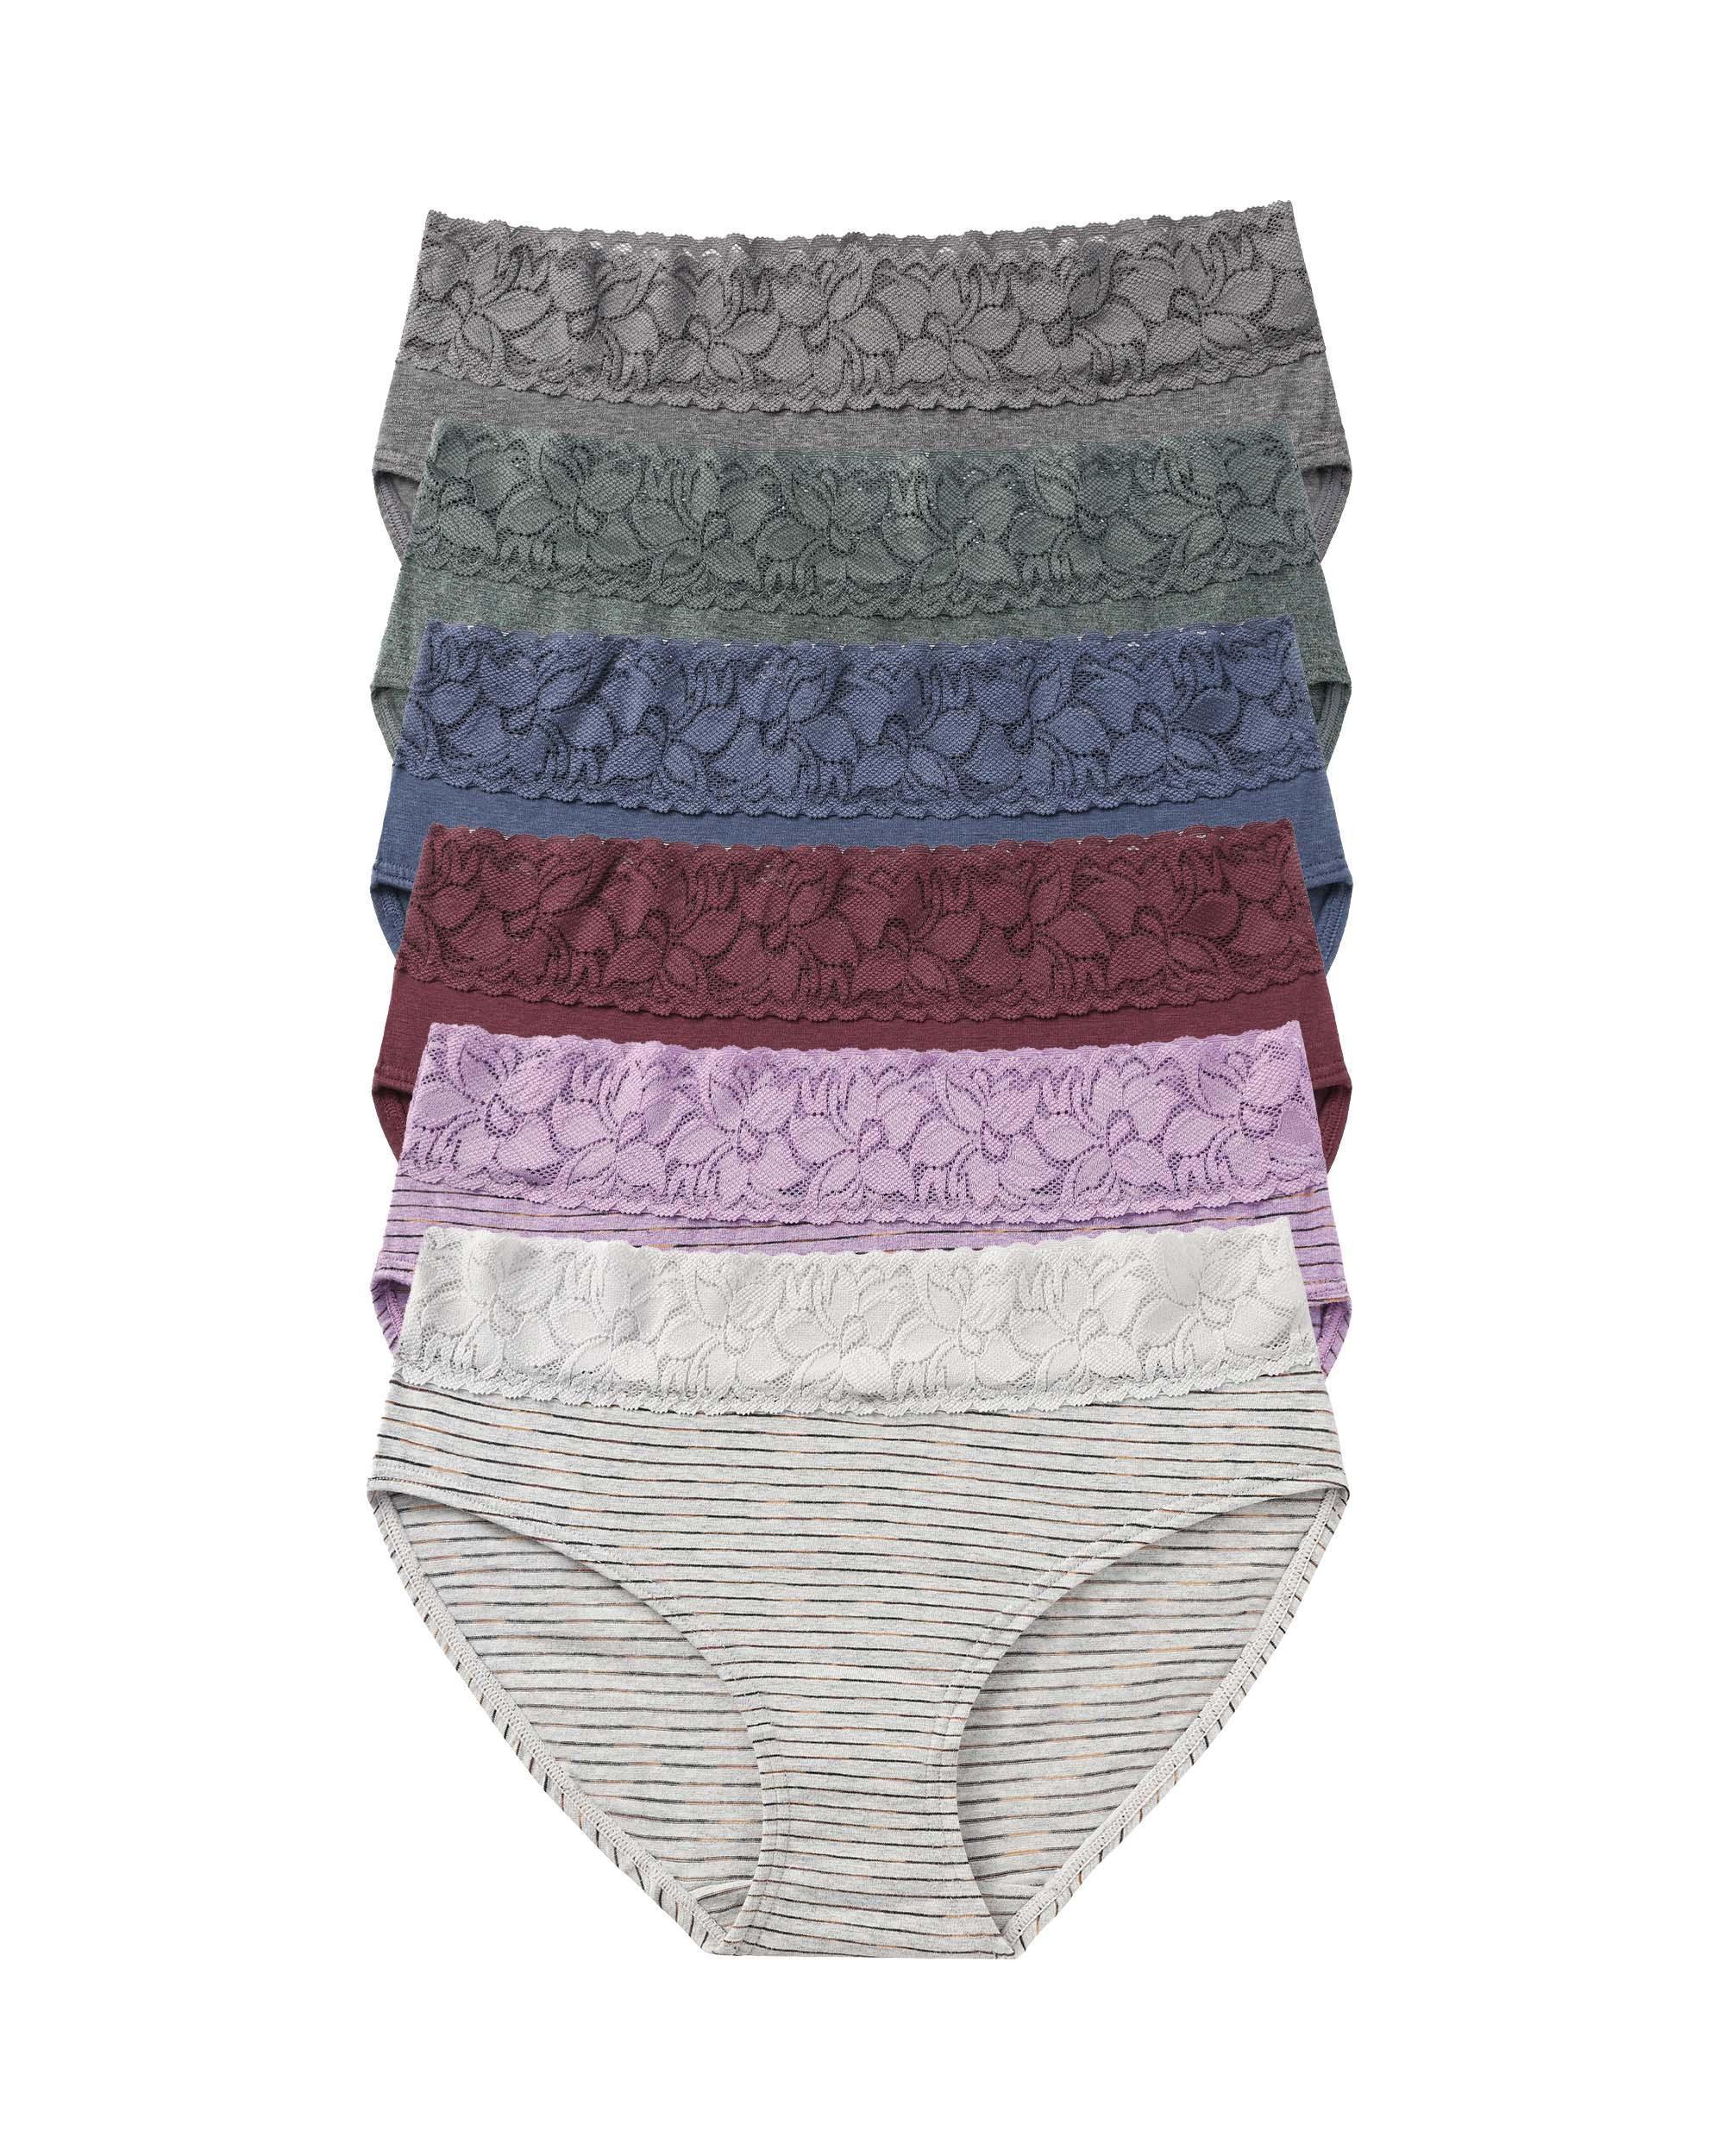 Altheanray Cotton Lace Panties -Line2 6-Piece Pack